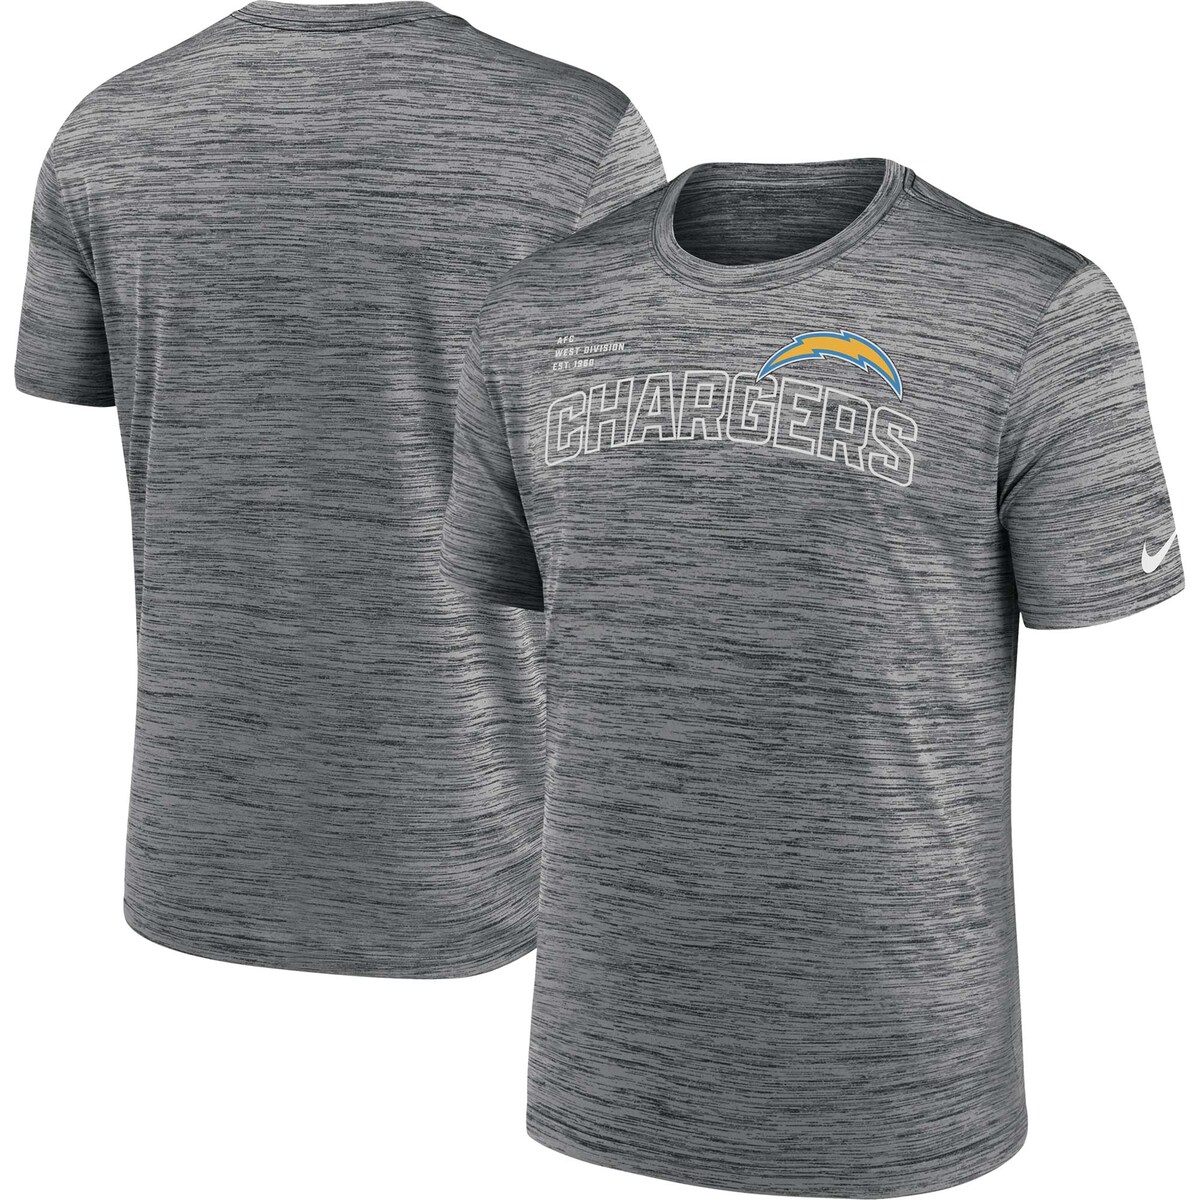 NFL チャージャーズ Tシャツ Nike ナイ...の商品画像